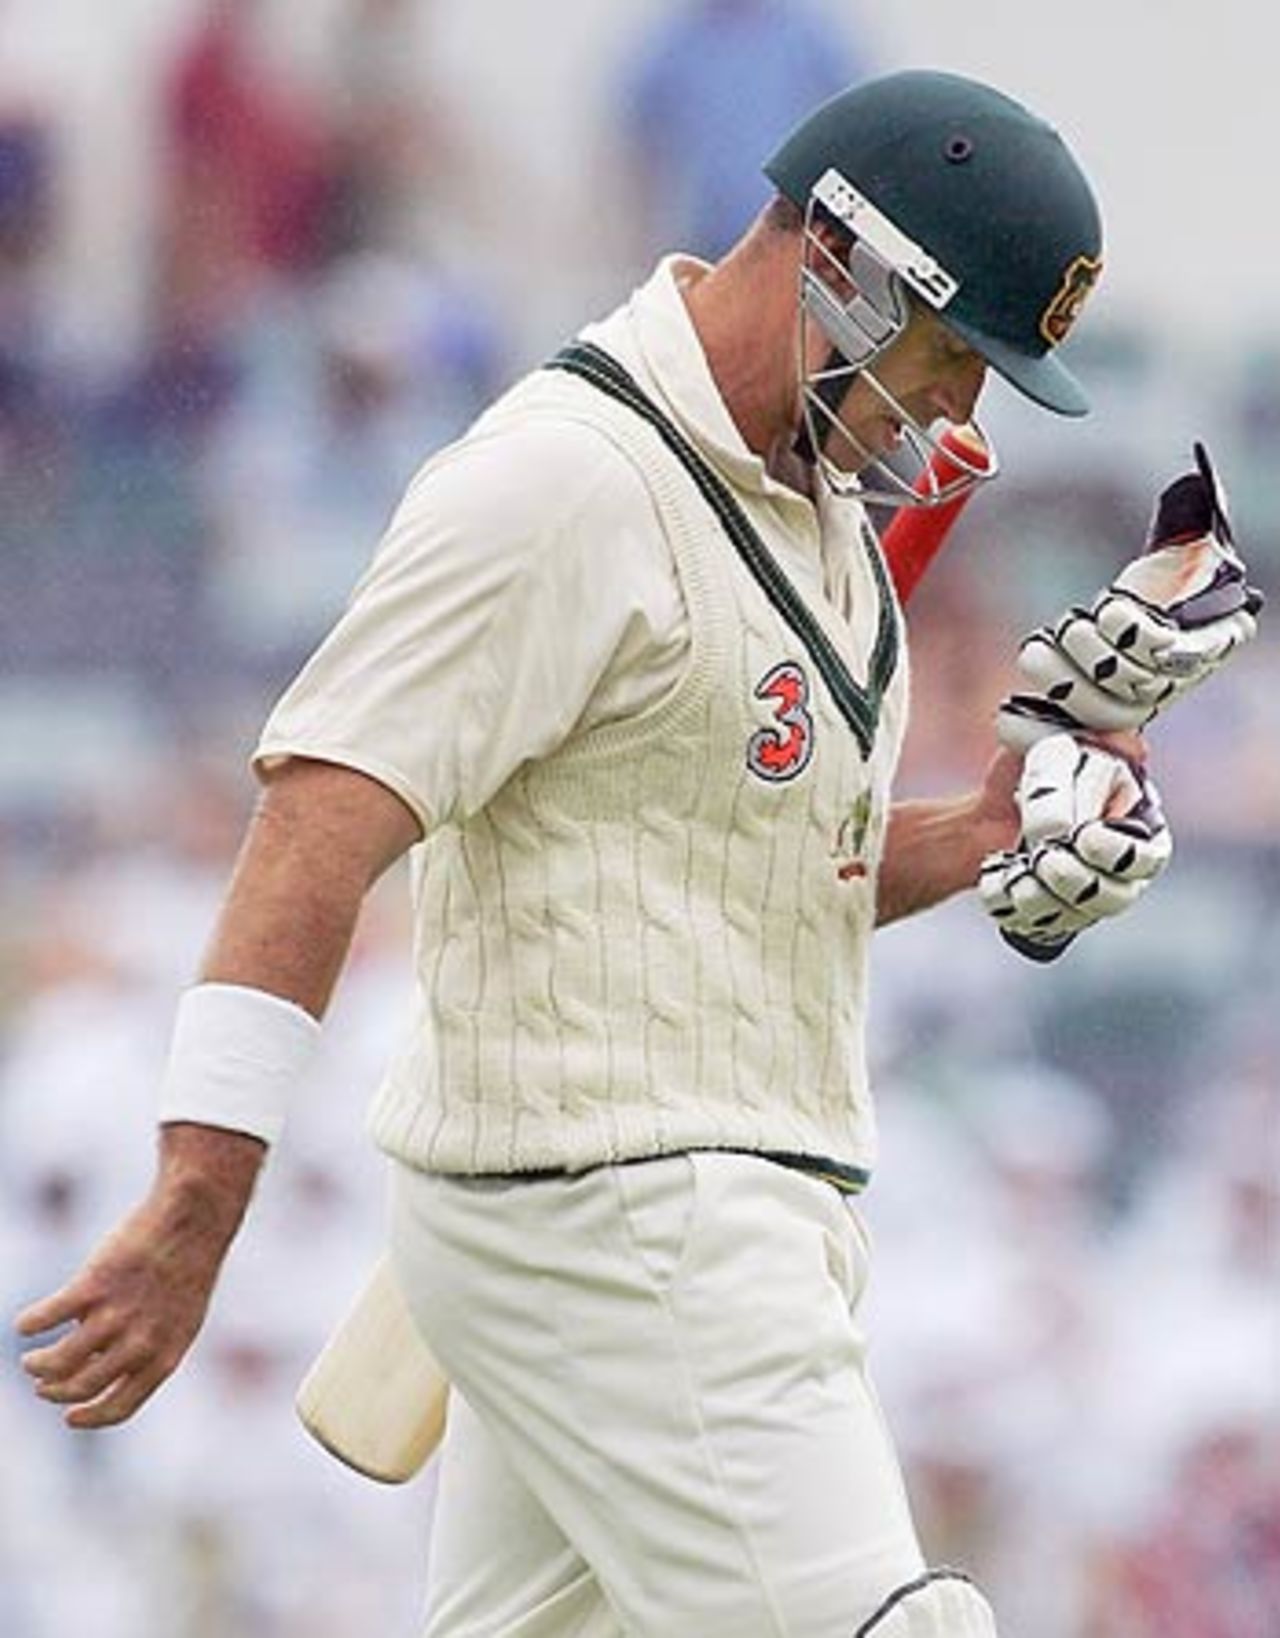 Matthew Hayden was dismissed for a duck, Australia v South Africa, 1st Test, Perth, 1st day, December 16, 2005